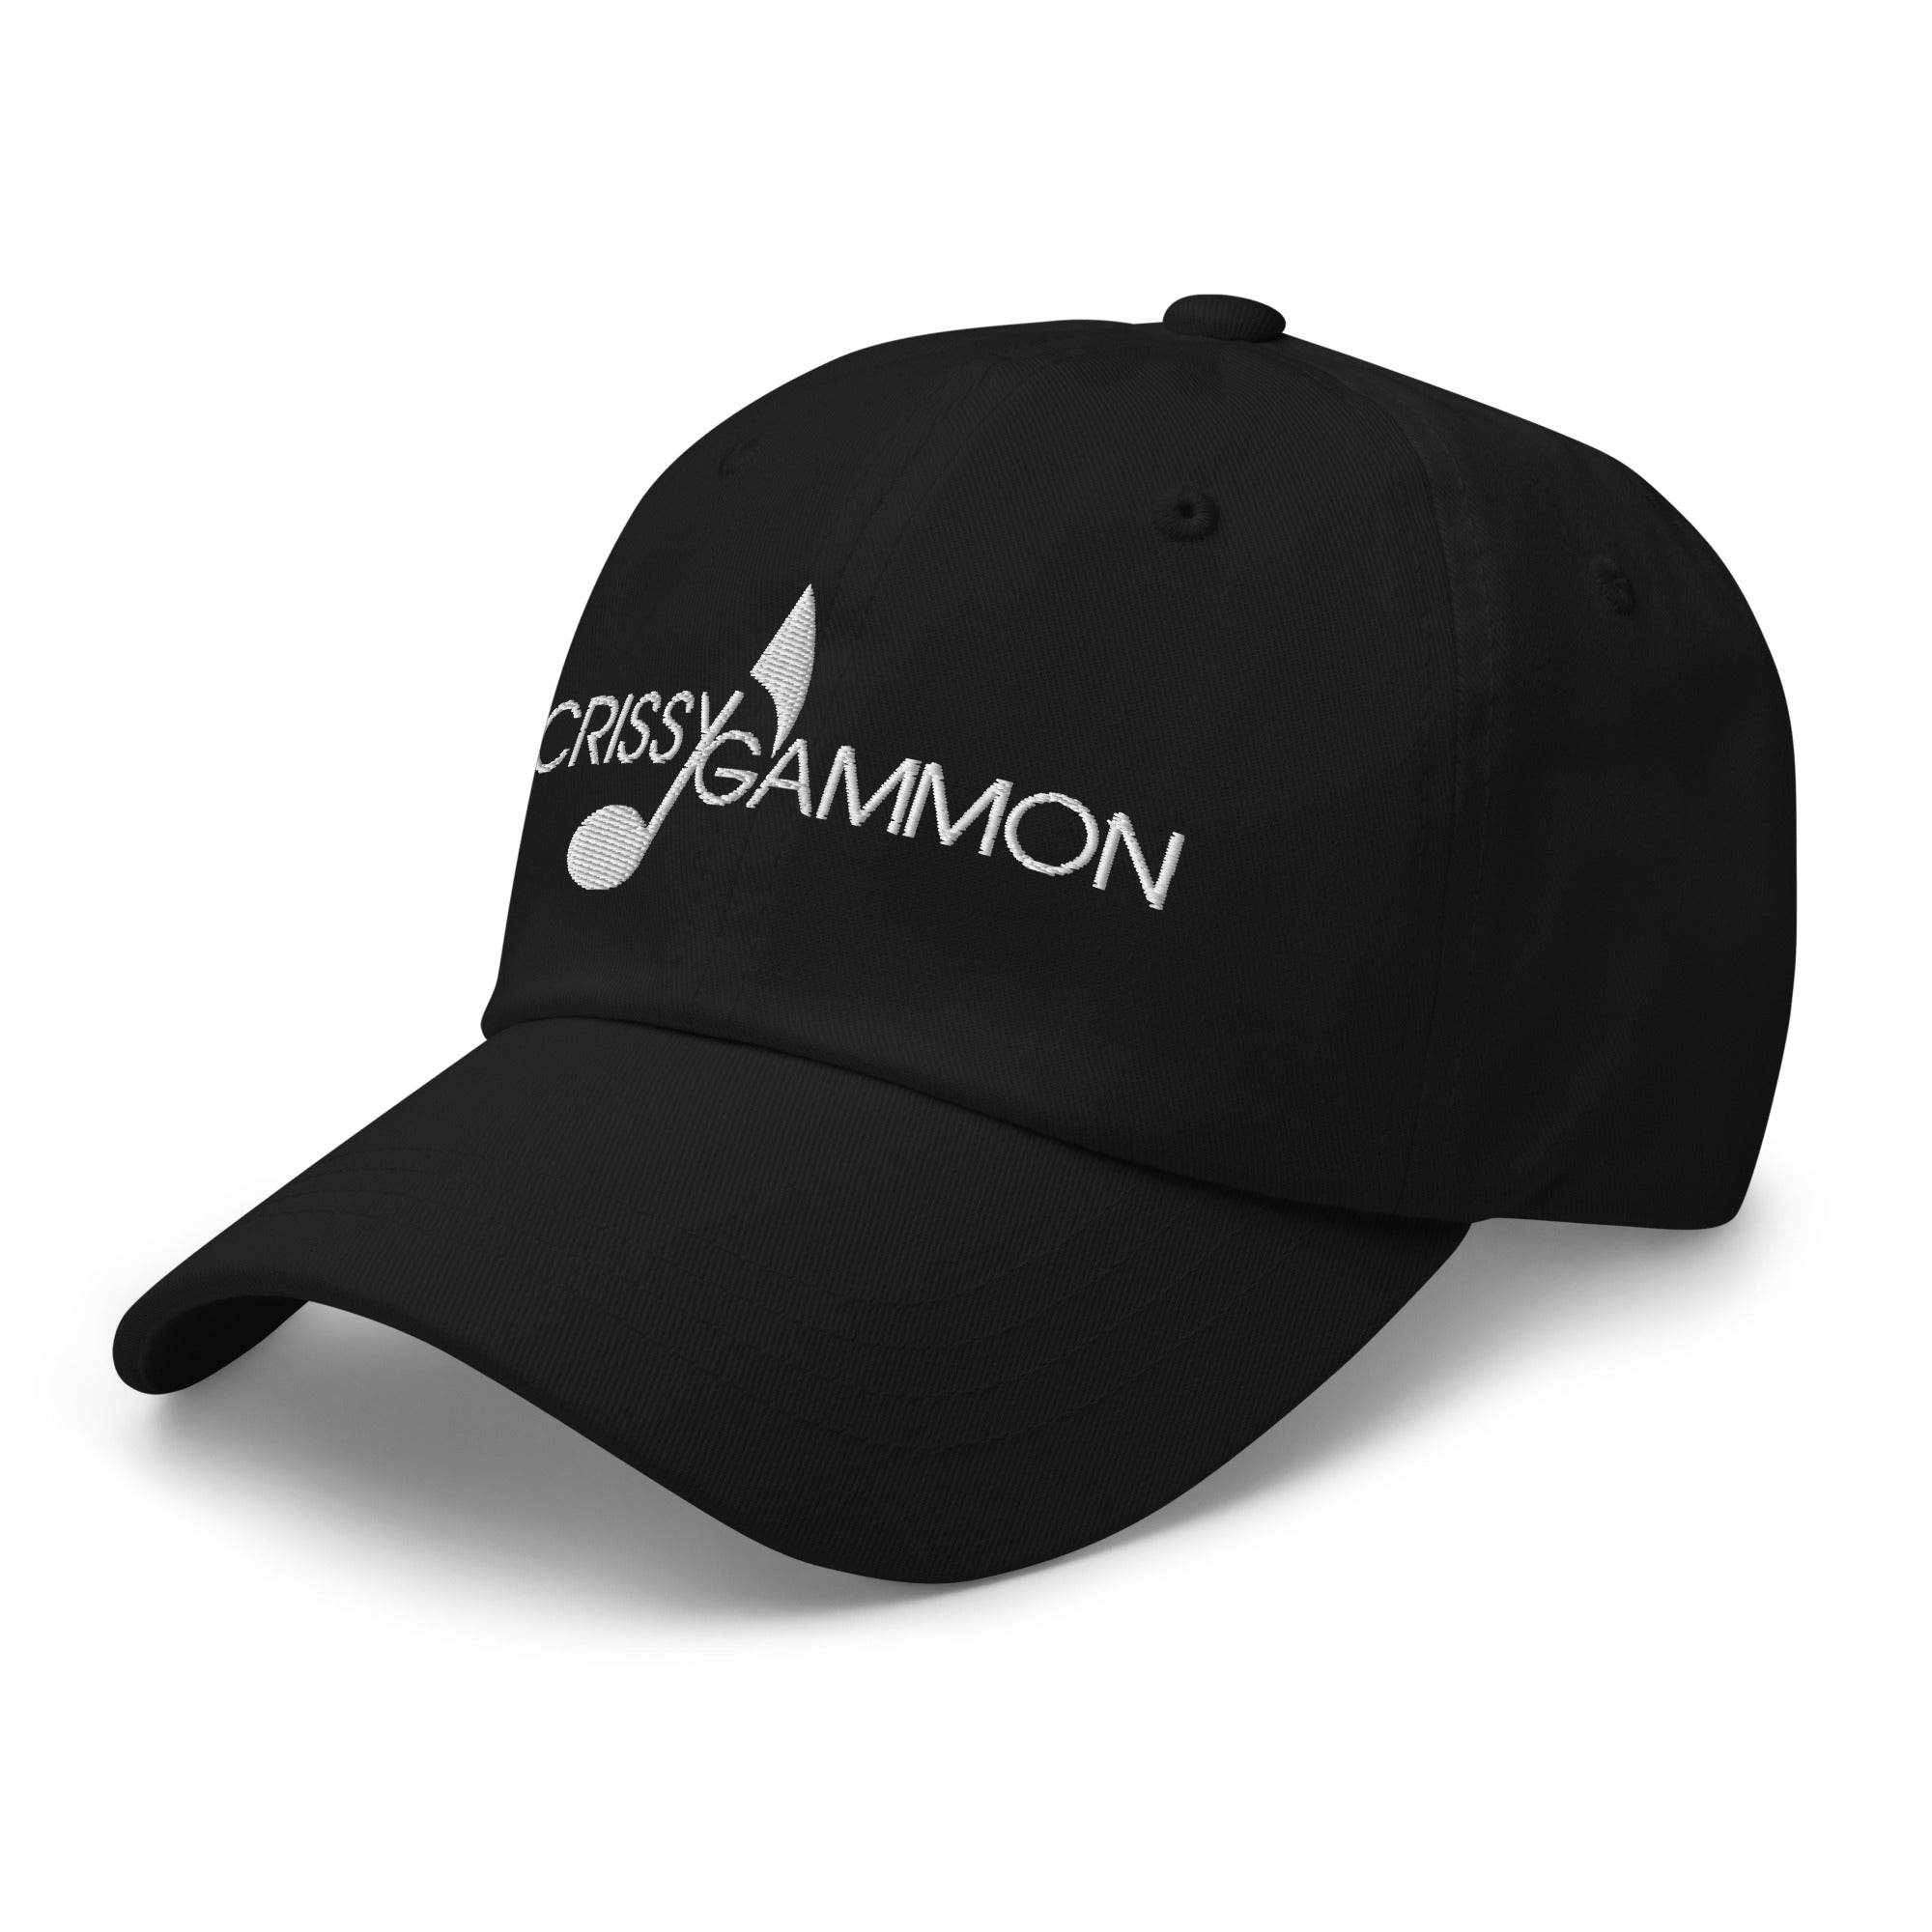 Crissy Gammon - Dad hat